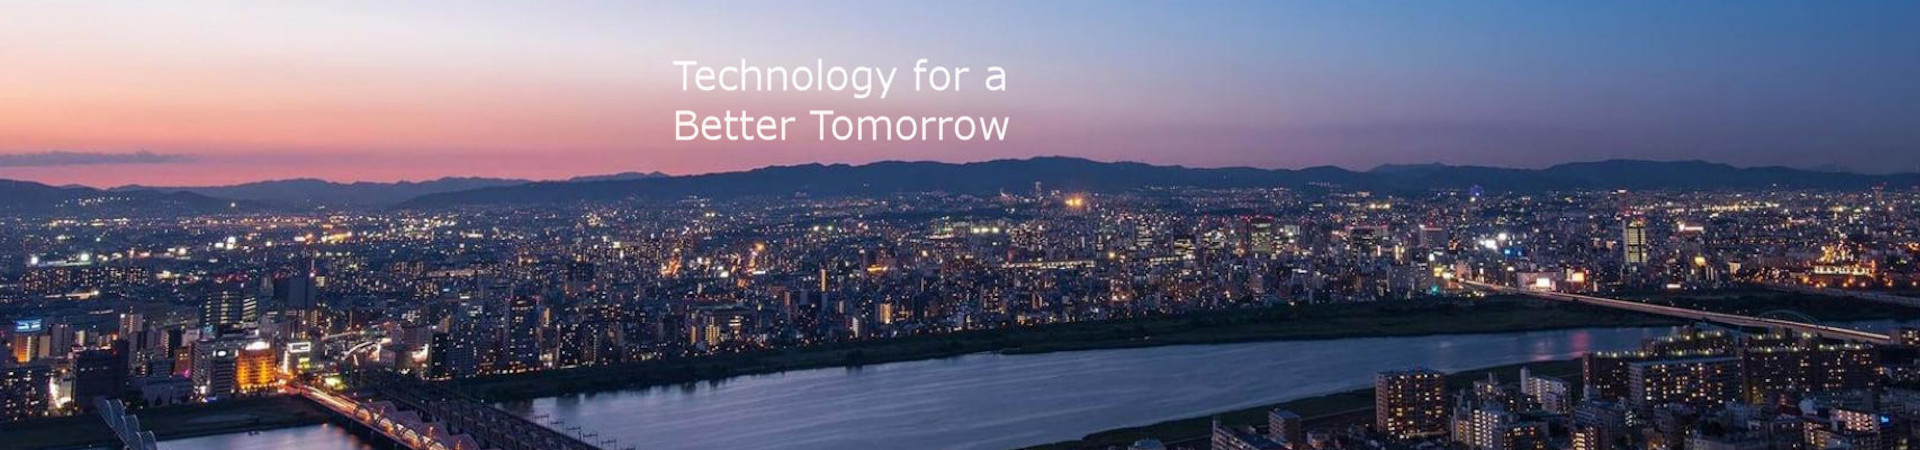 Technology for a Better Tomorrow Slide